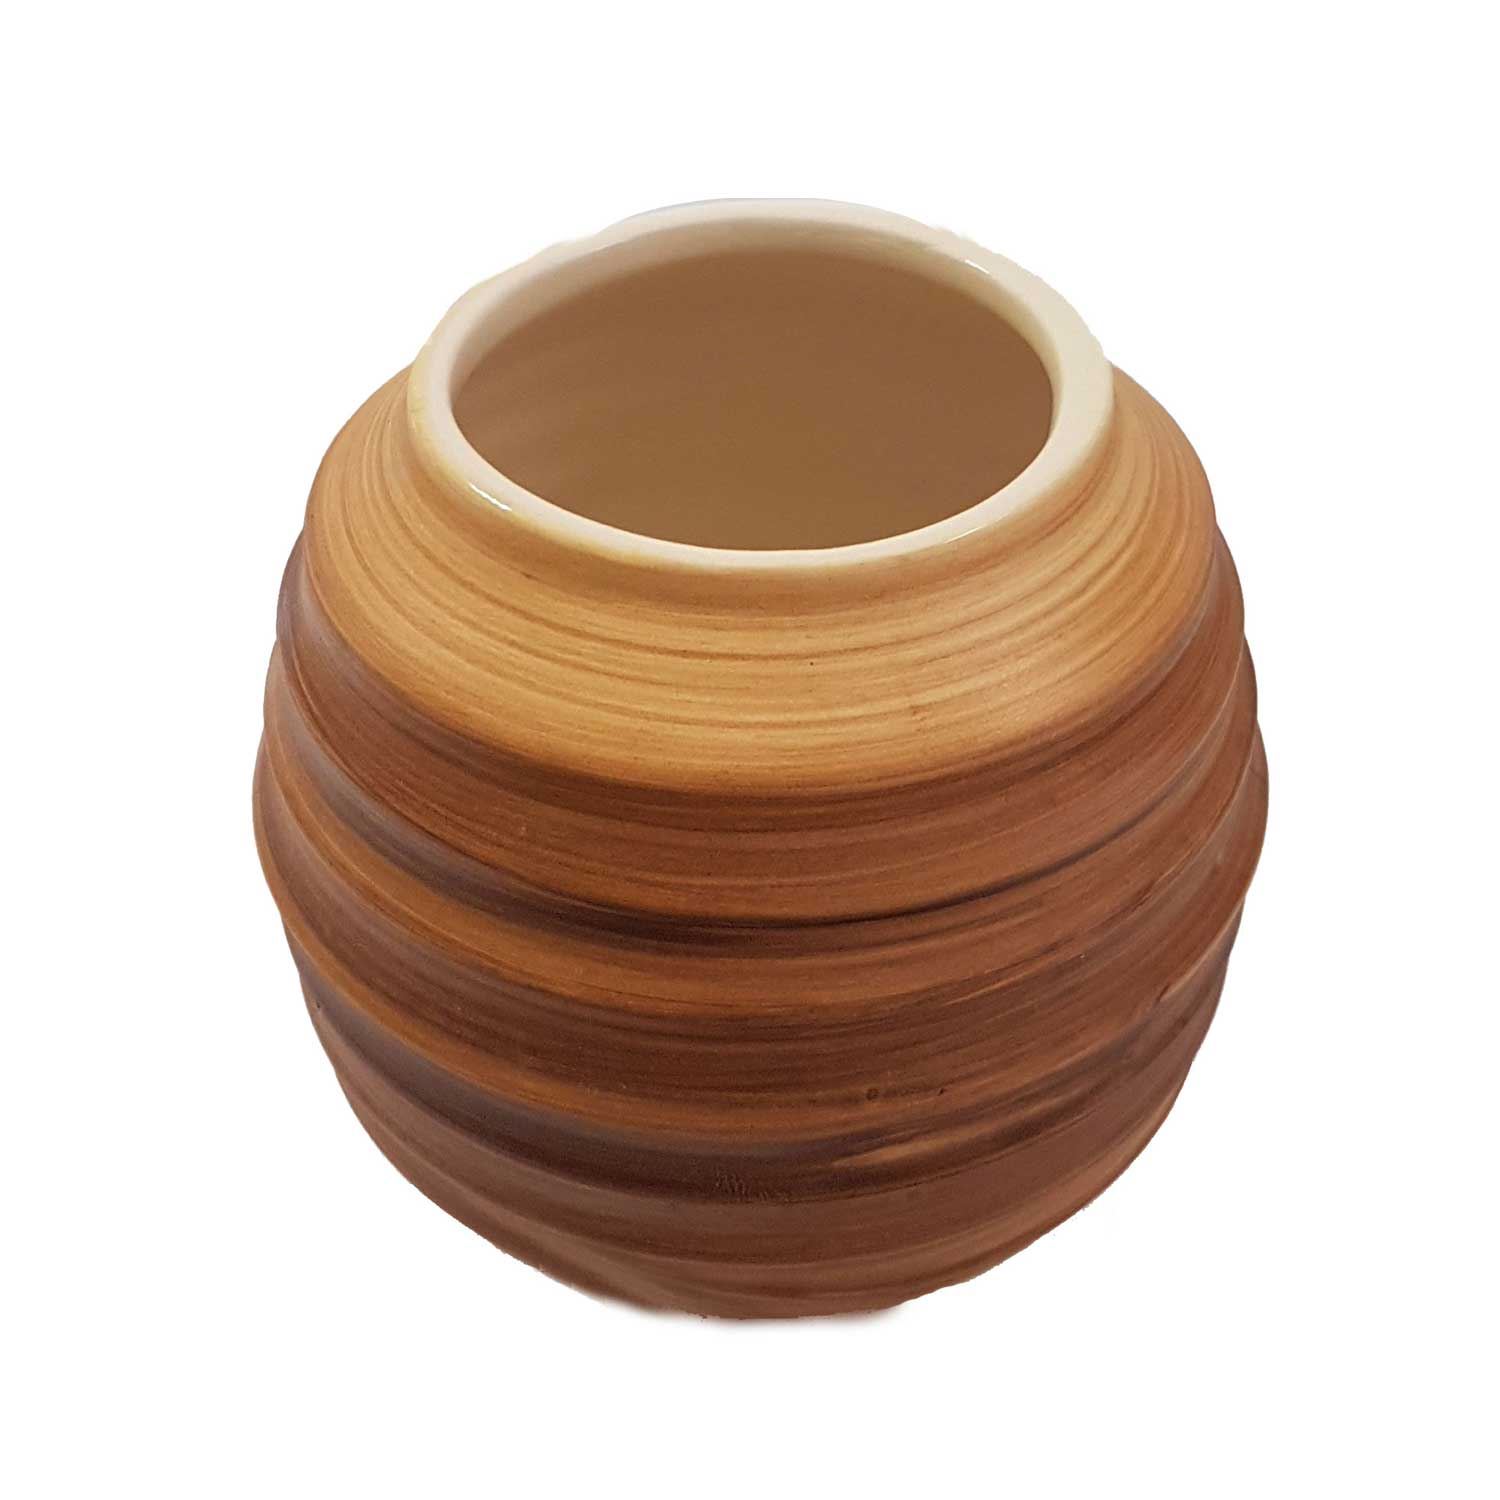 Mate drinking vessel Ceramic (light)